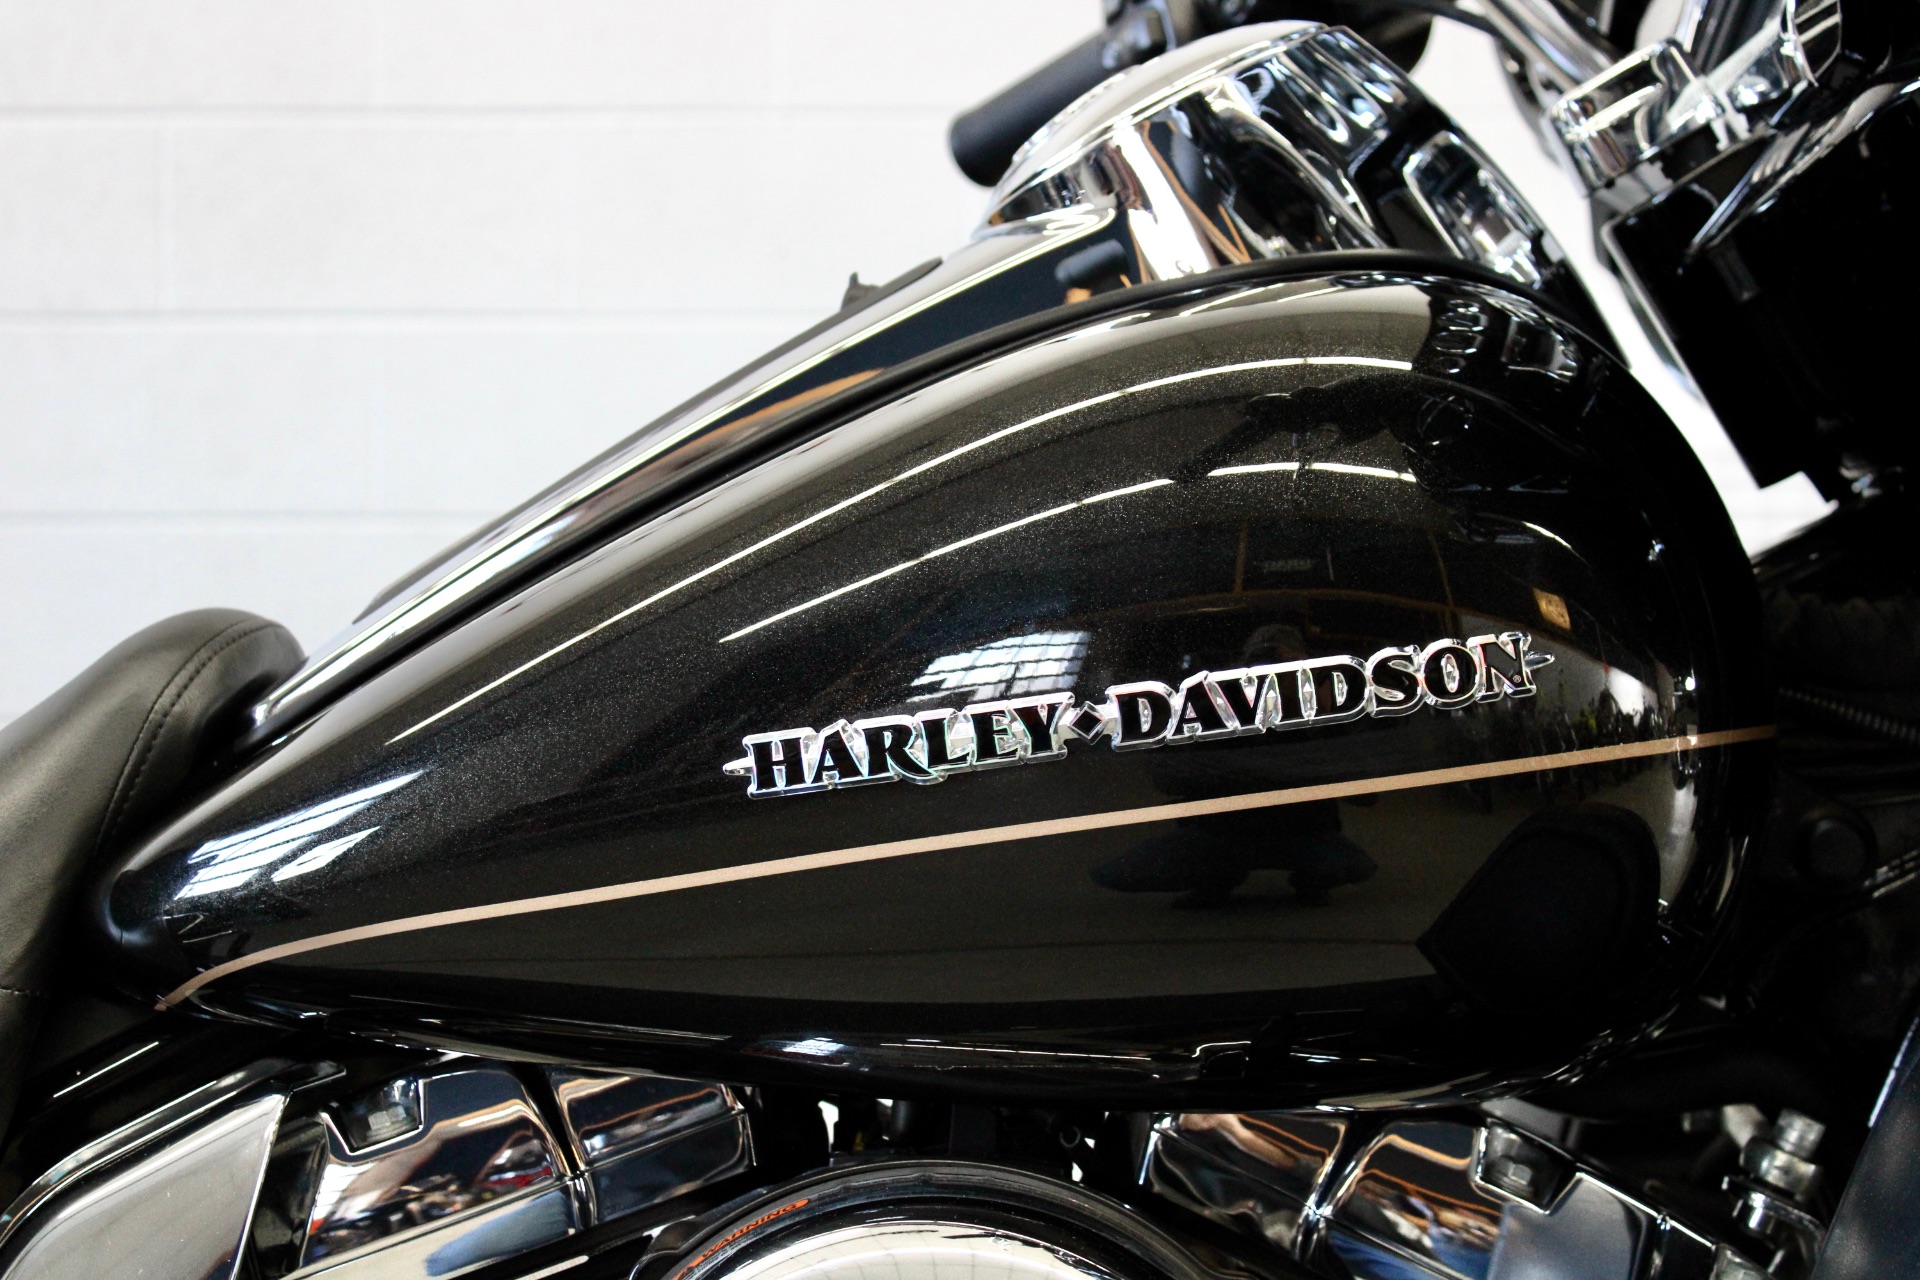 2016 Harley-Davidson Ultra Limited in Fredericksburg, Virginia - Photo 13